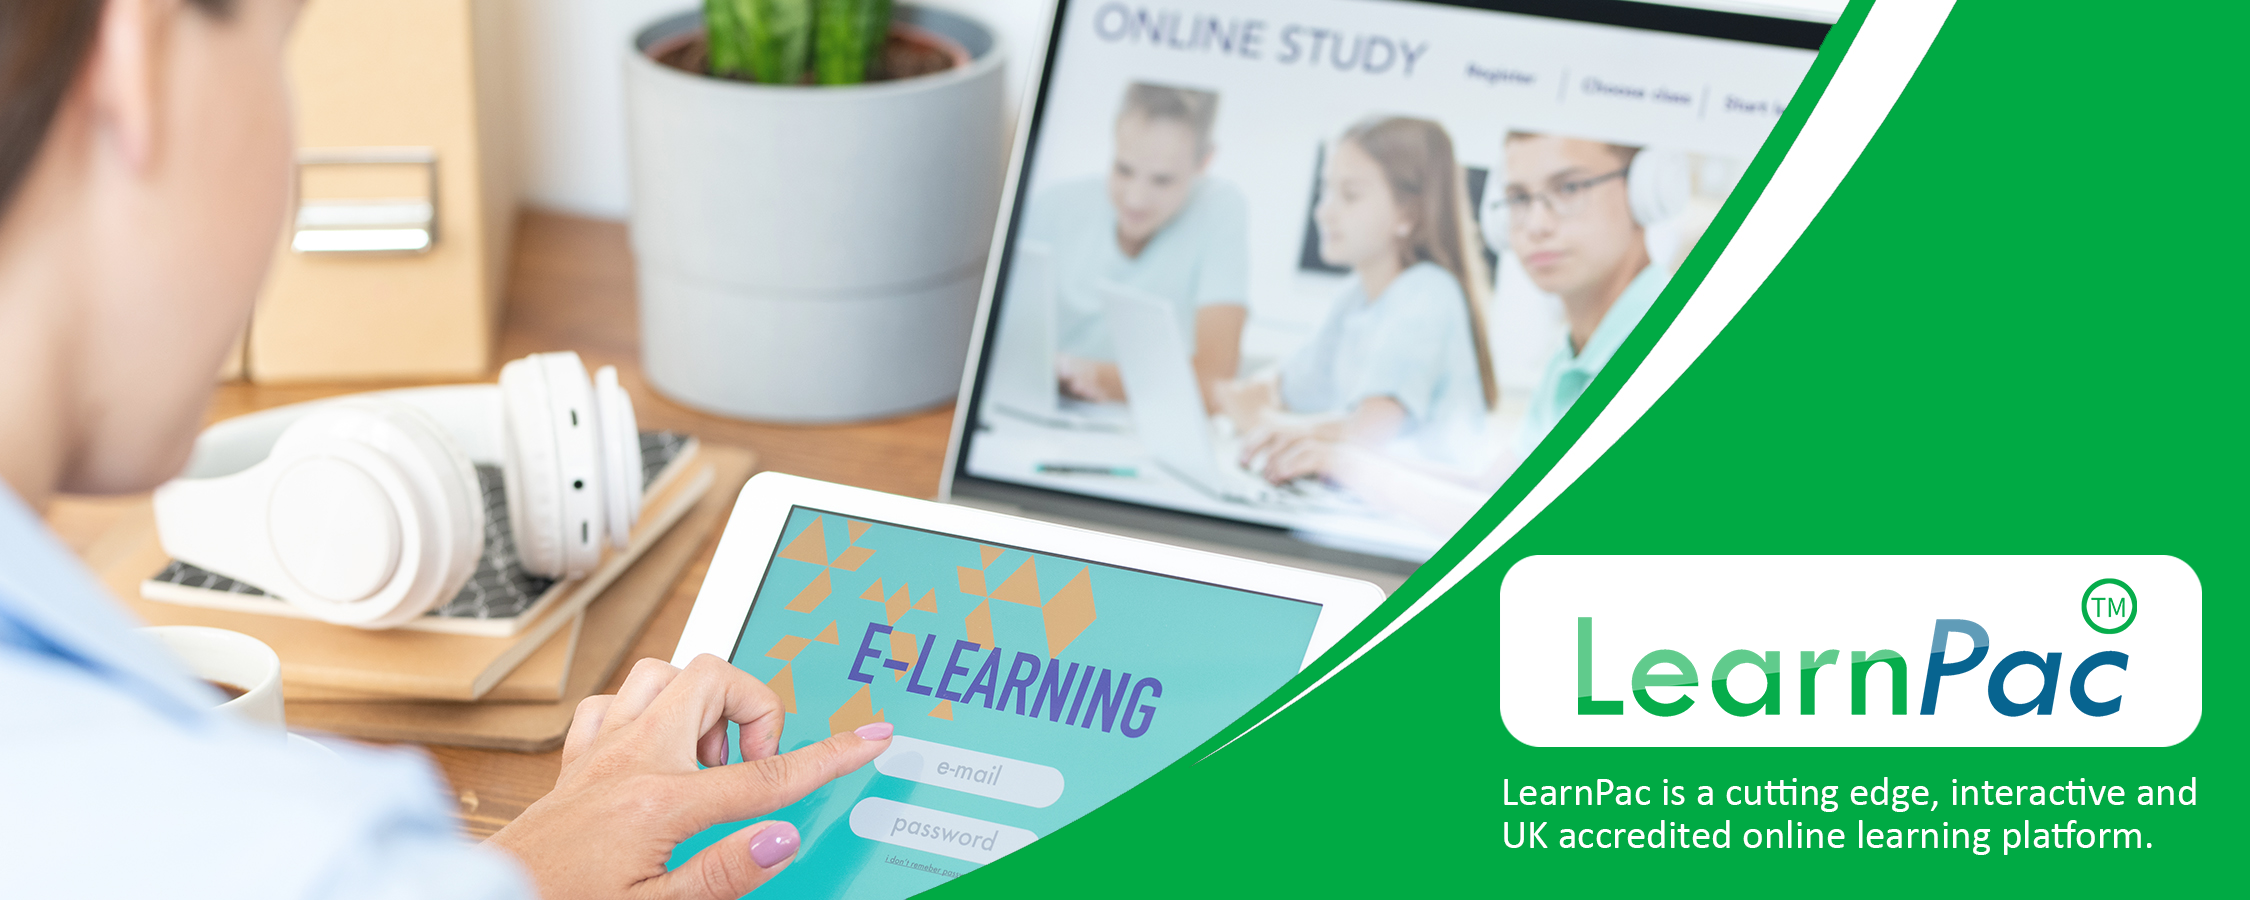 Principles of People Management - Online Learning Courses - E-Learning Courses - LearnPac Systems UK -